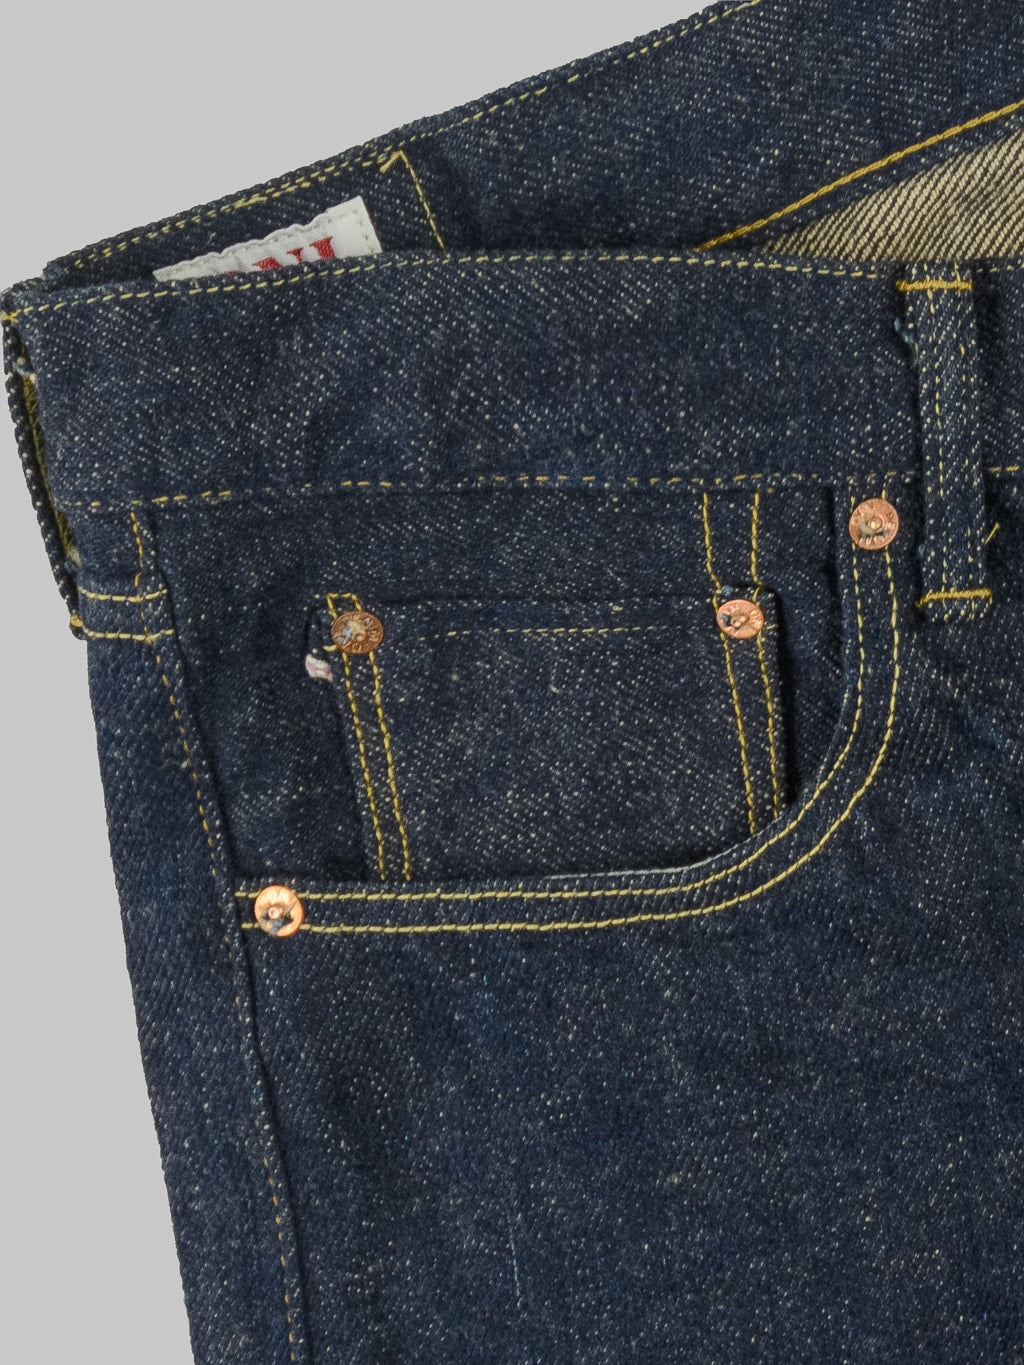 ONI Denim 544ZR Secret Denim Stylish Tapered Jeans coin pocket